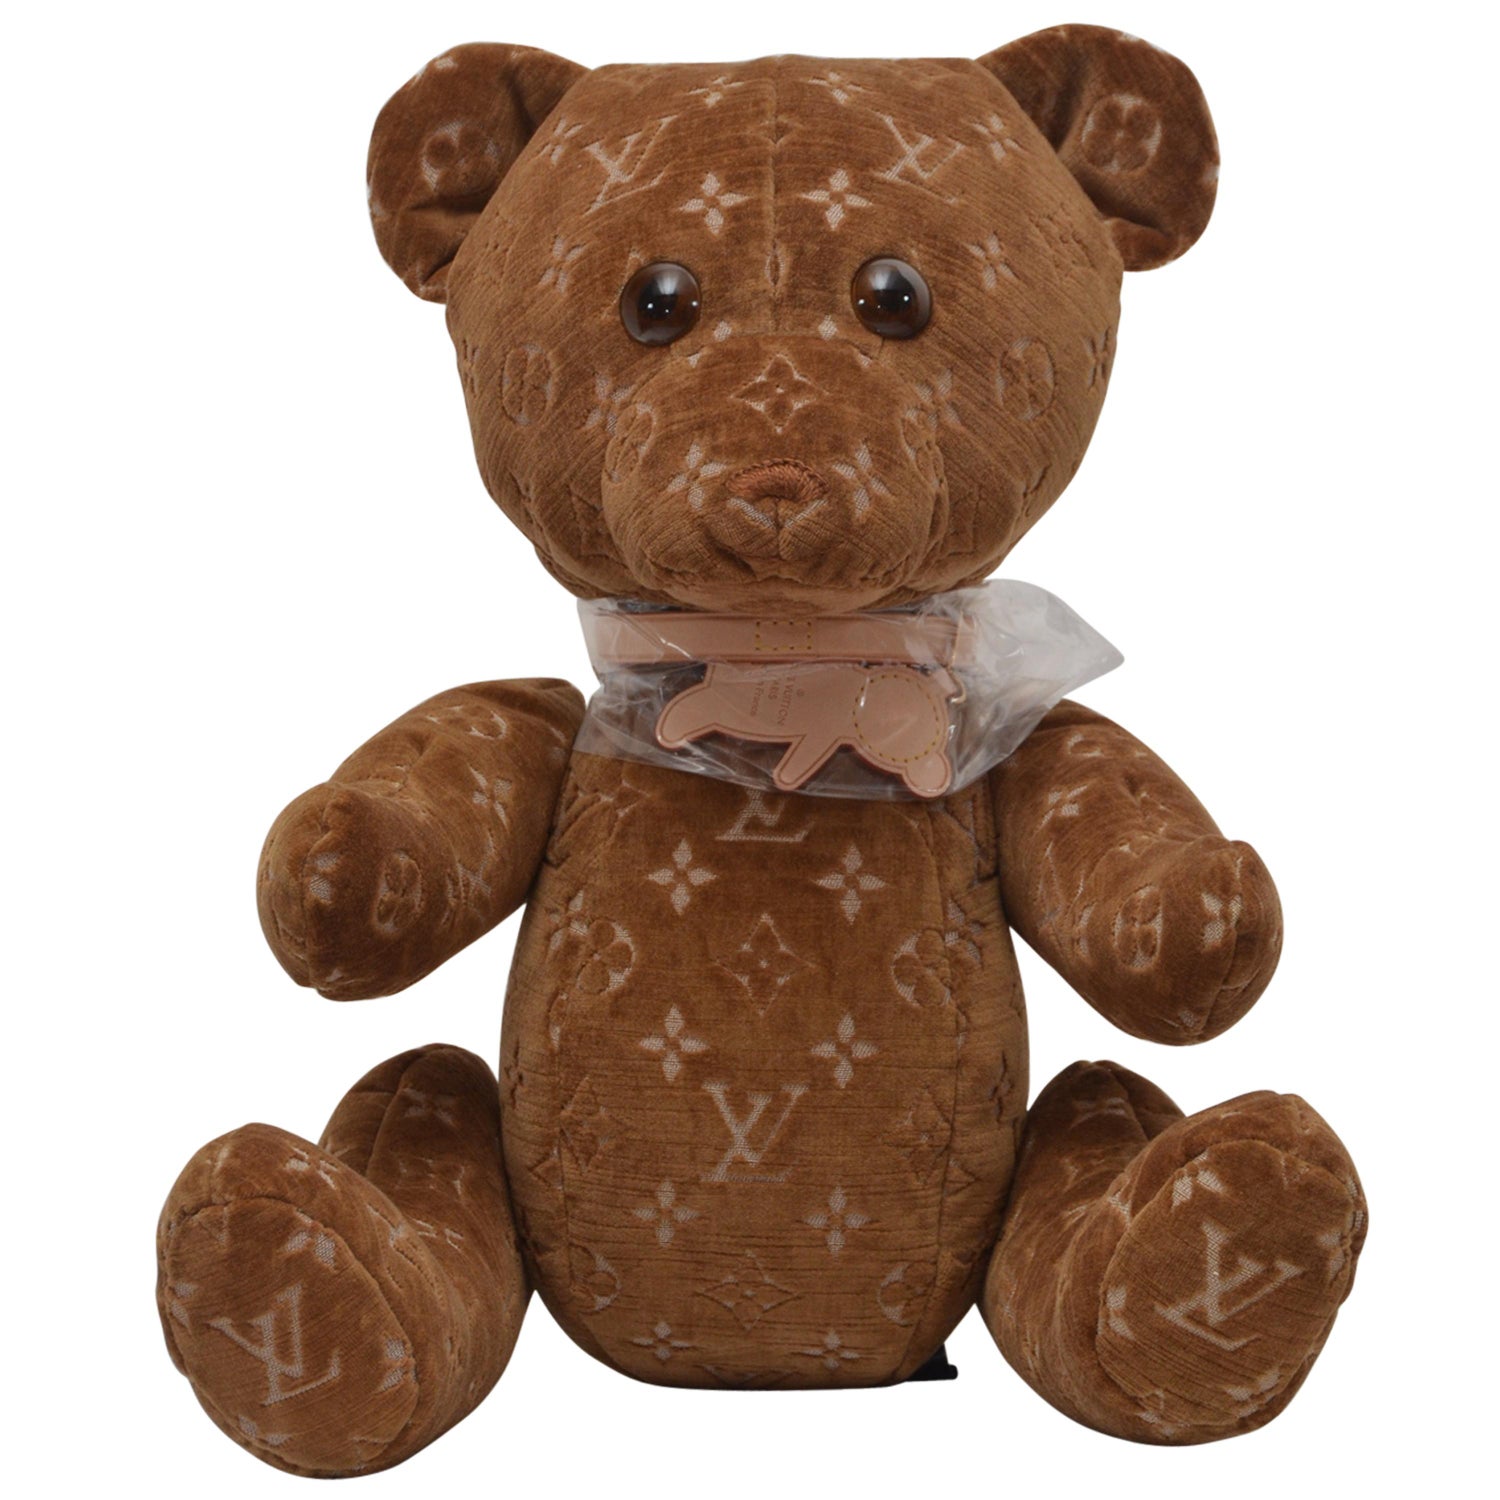 At Auction: Louis Vuitton, LOUIS VUITTON Teddy bear DOUDOU.